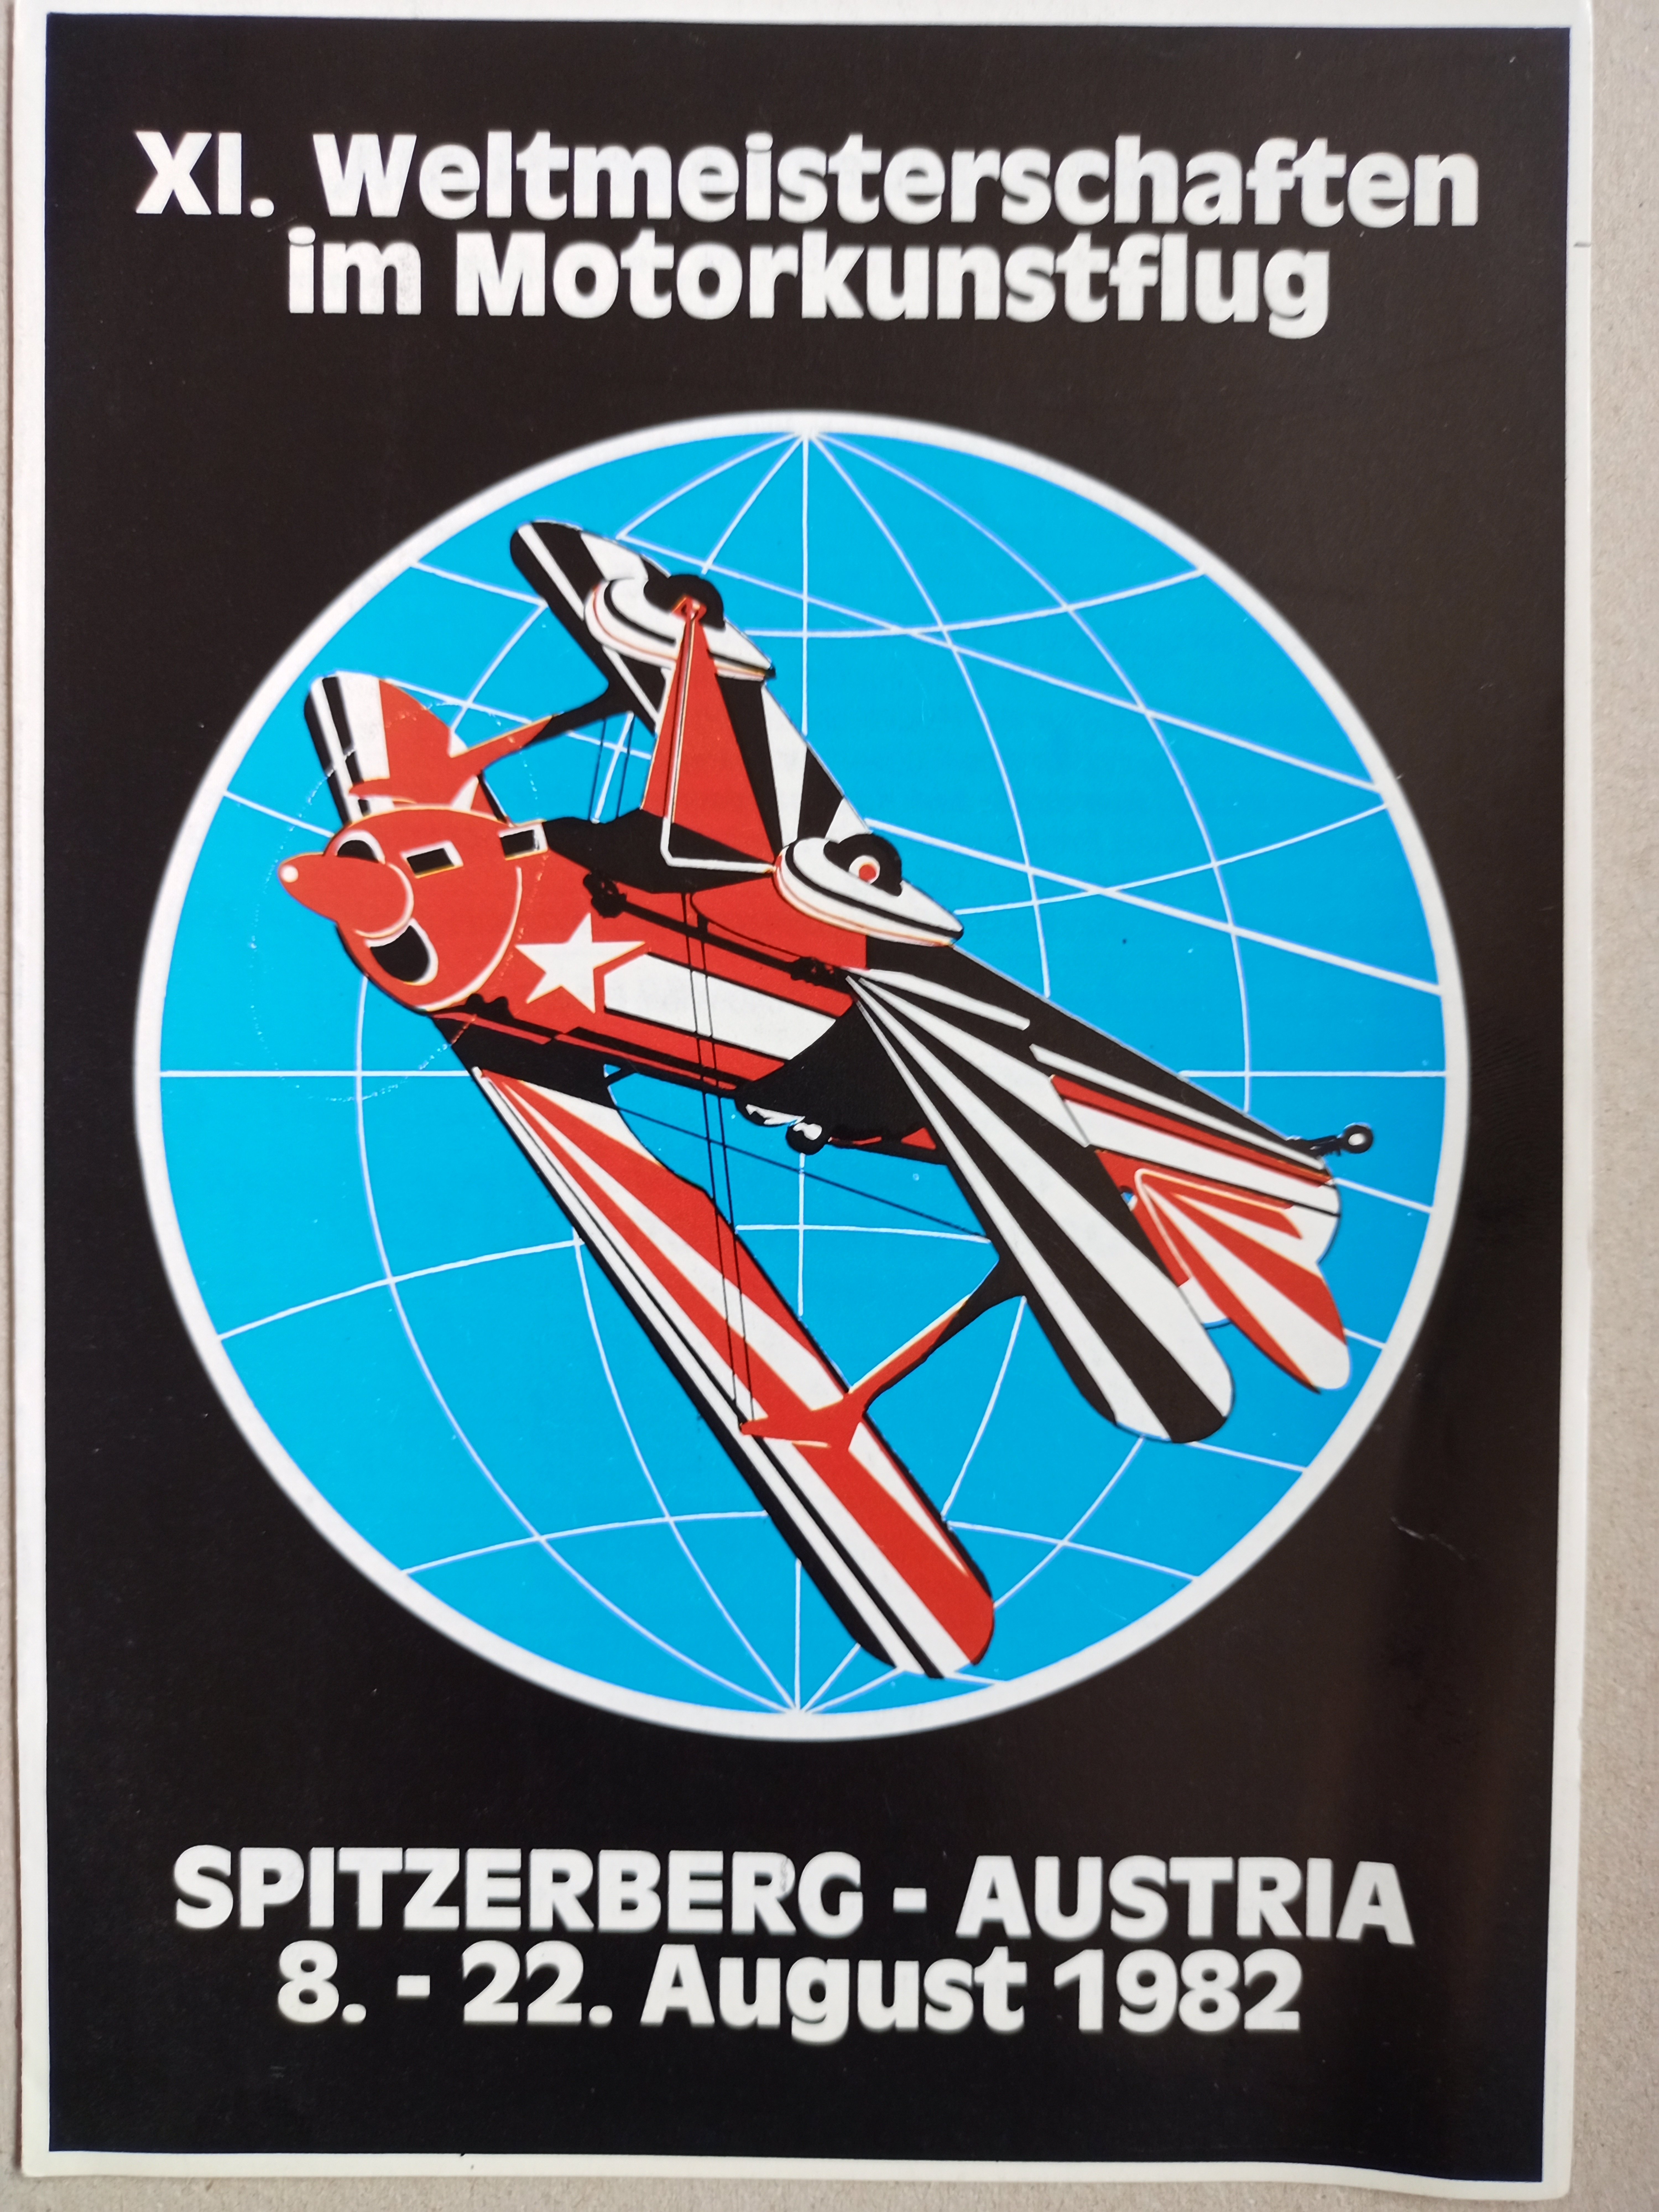 WM Motorkunstflug Sitzerberg 1982 (Deutsches Segelflugmuseum mit Modellflug CC BY-NC-SA)